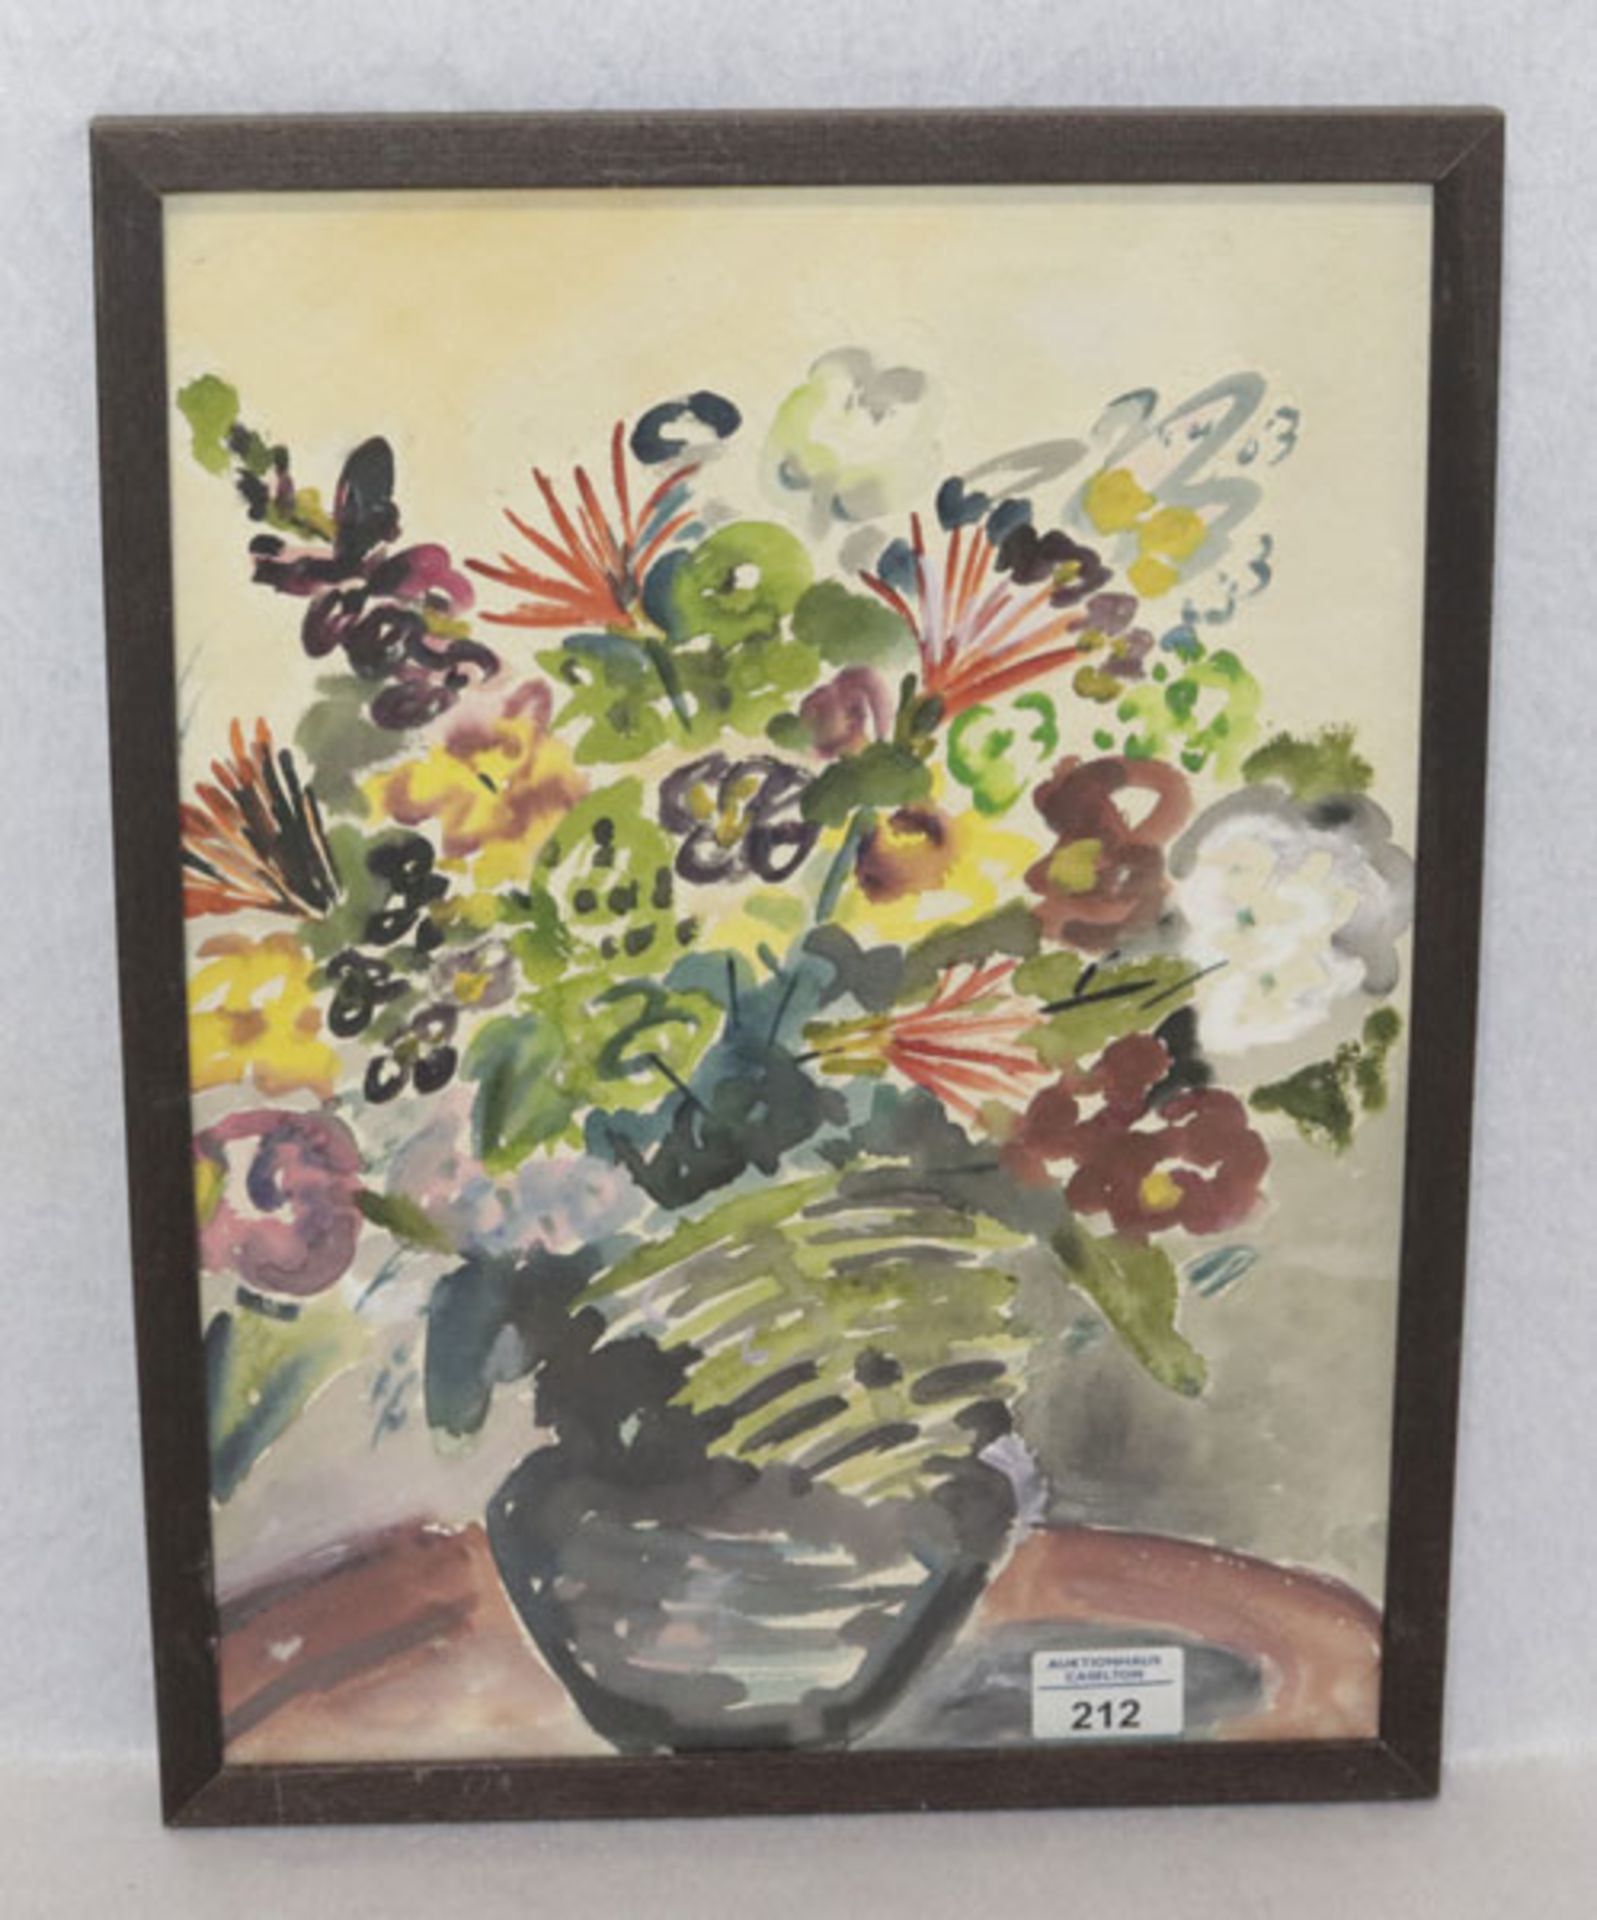 Aquarell 'Blumen in Vase', signiert R. Th. Bosshard, ev. Rodolphe Theophile Bosshard, unter Glas ger